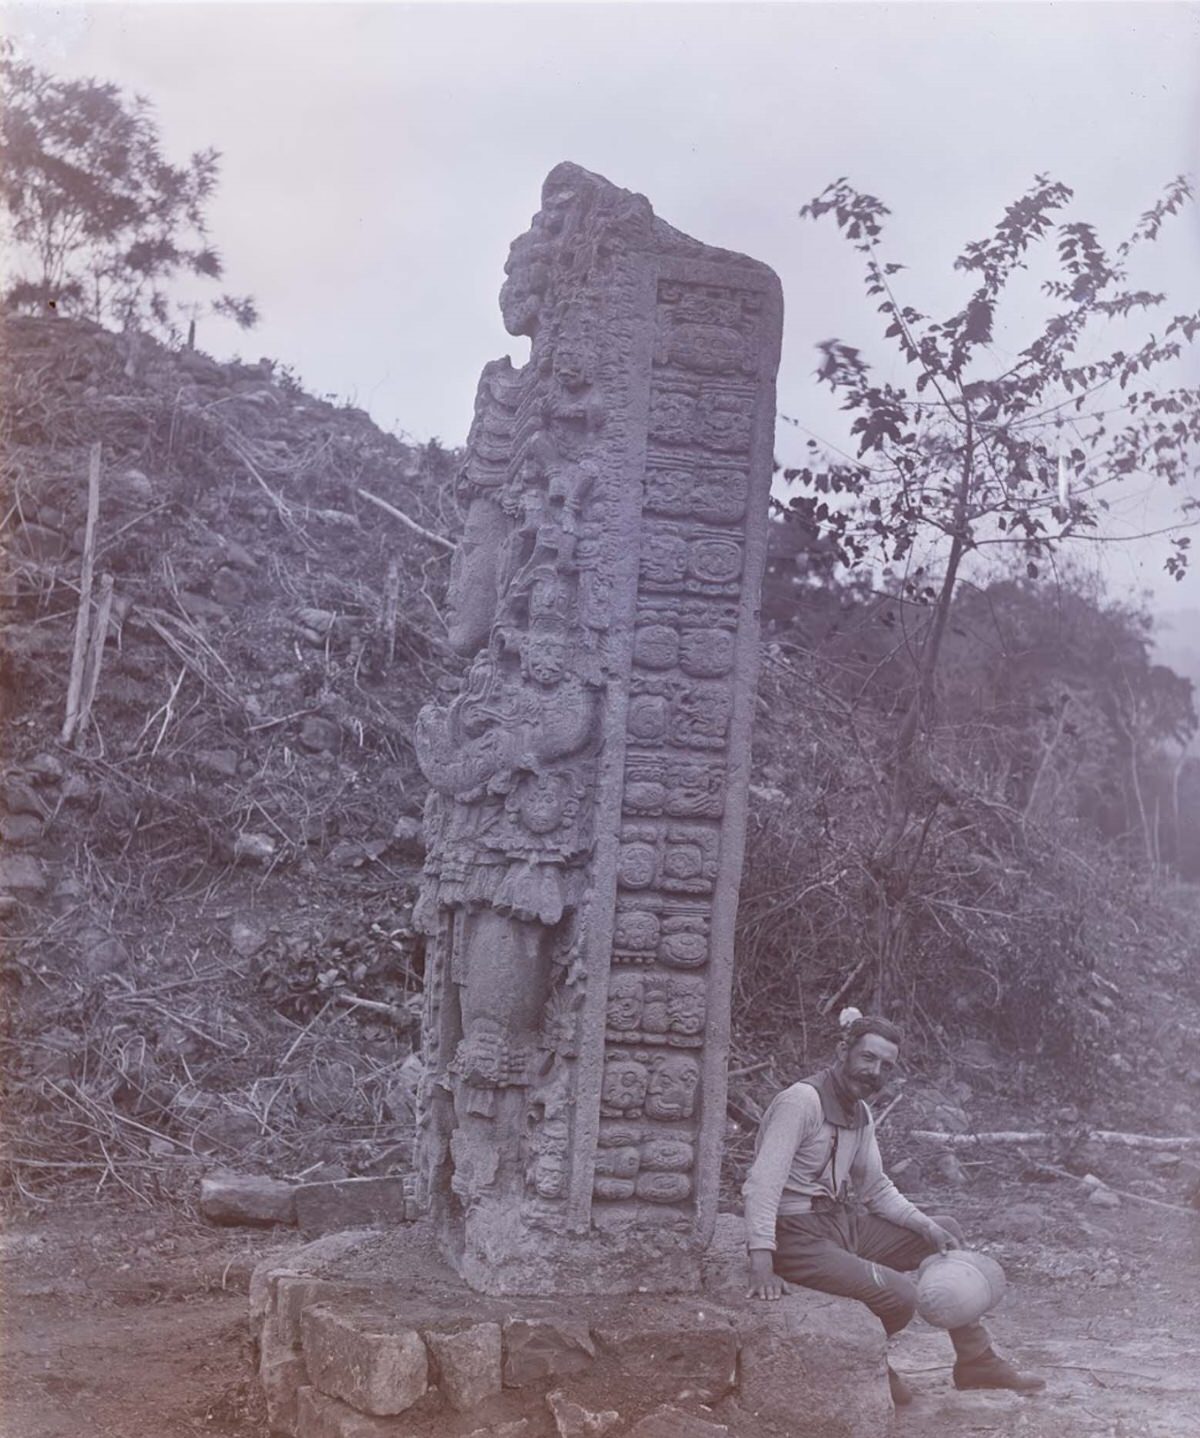 Photograph of Copán taken by A.P. Maudslay.